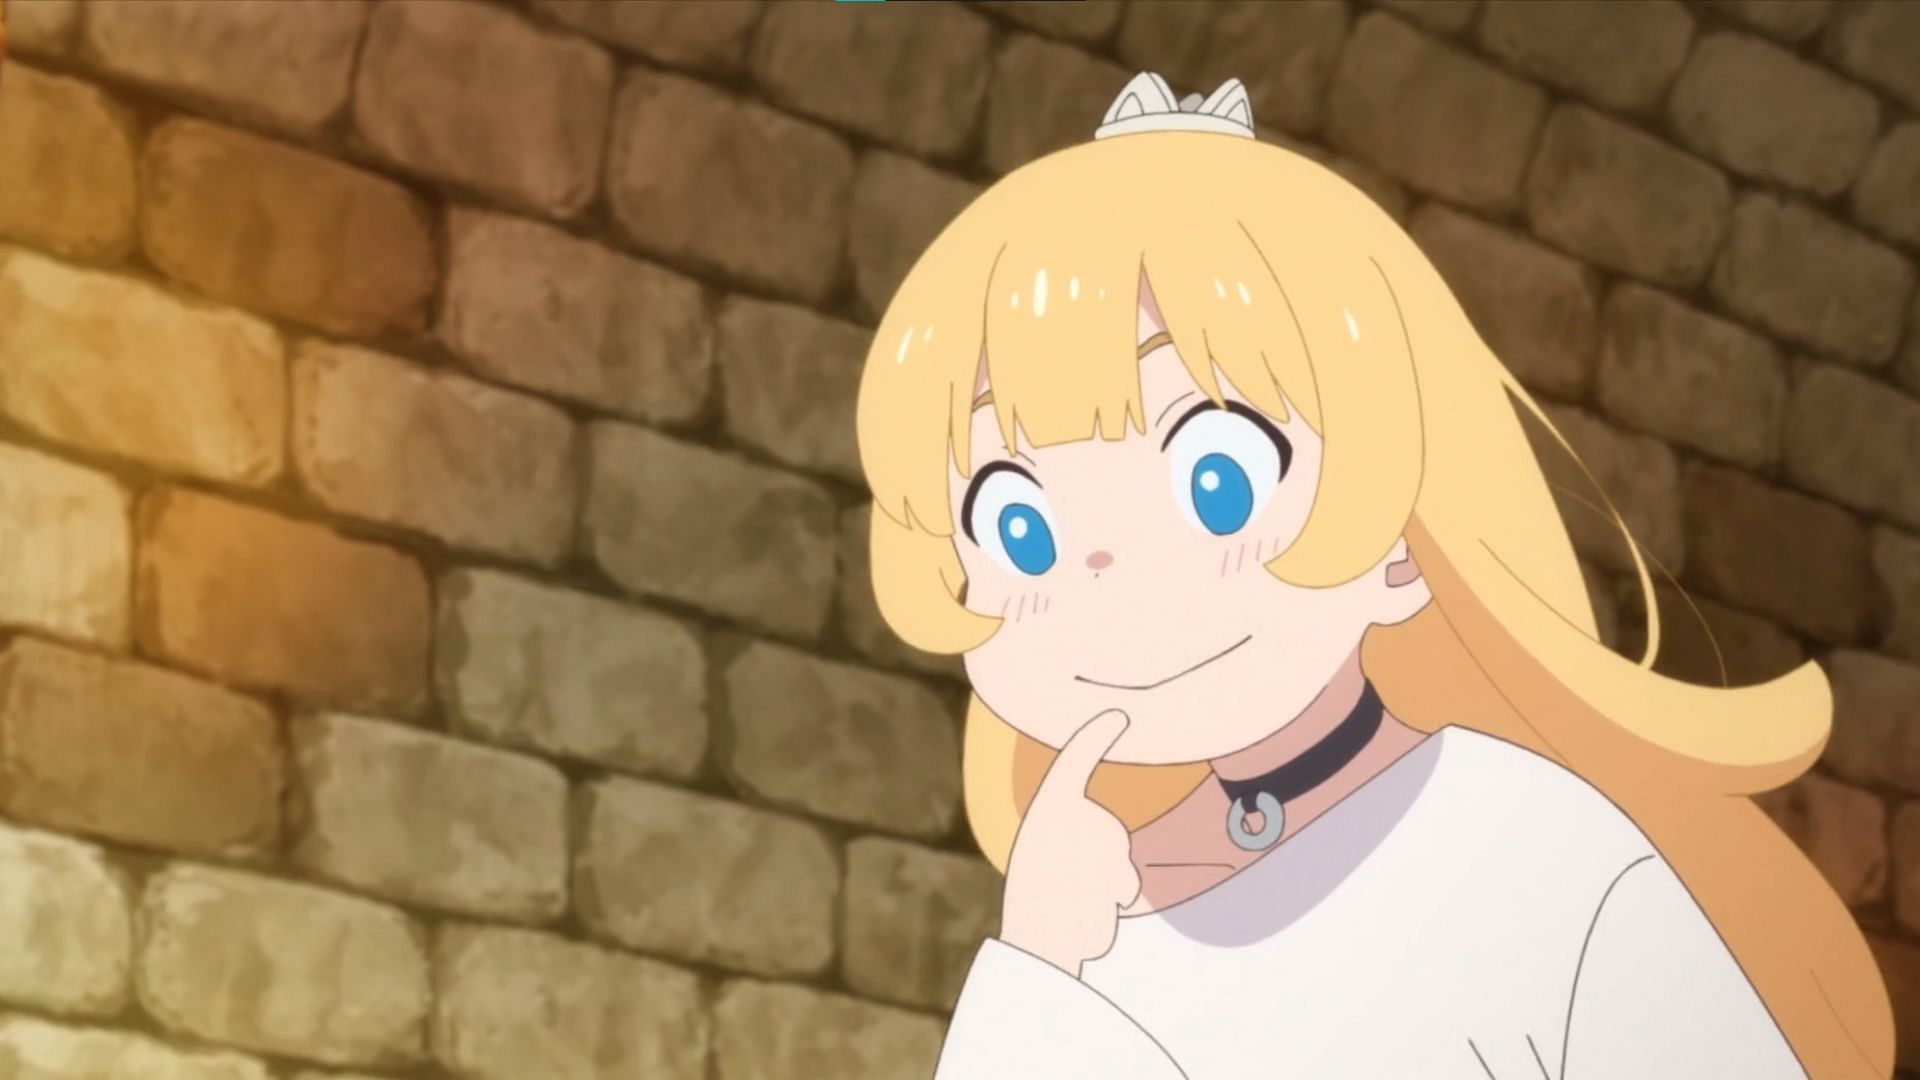 The Princess as shown in the anime (Image via Studio PINE JAM)